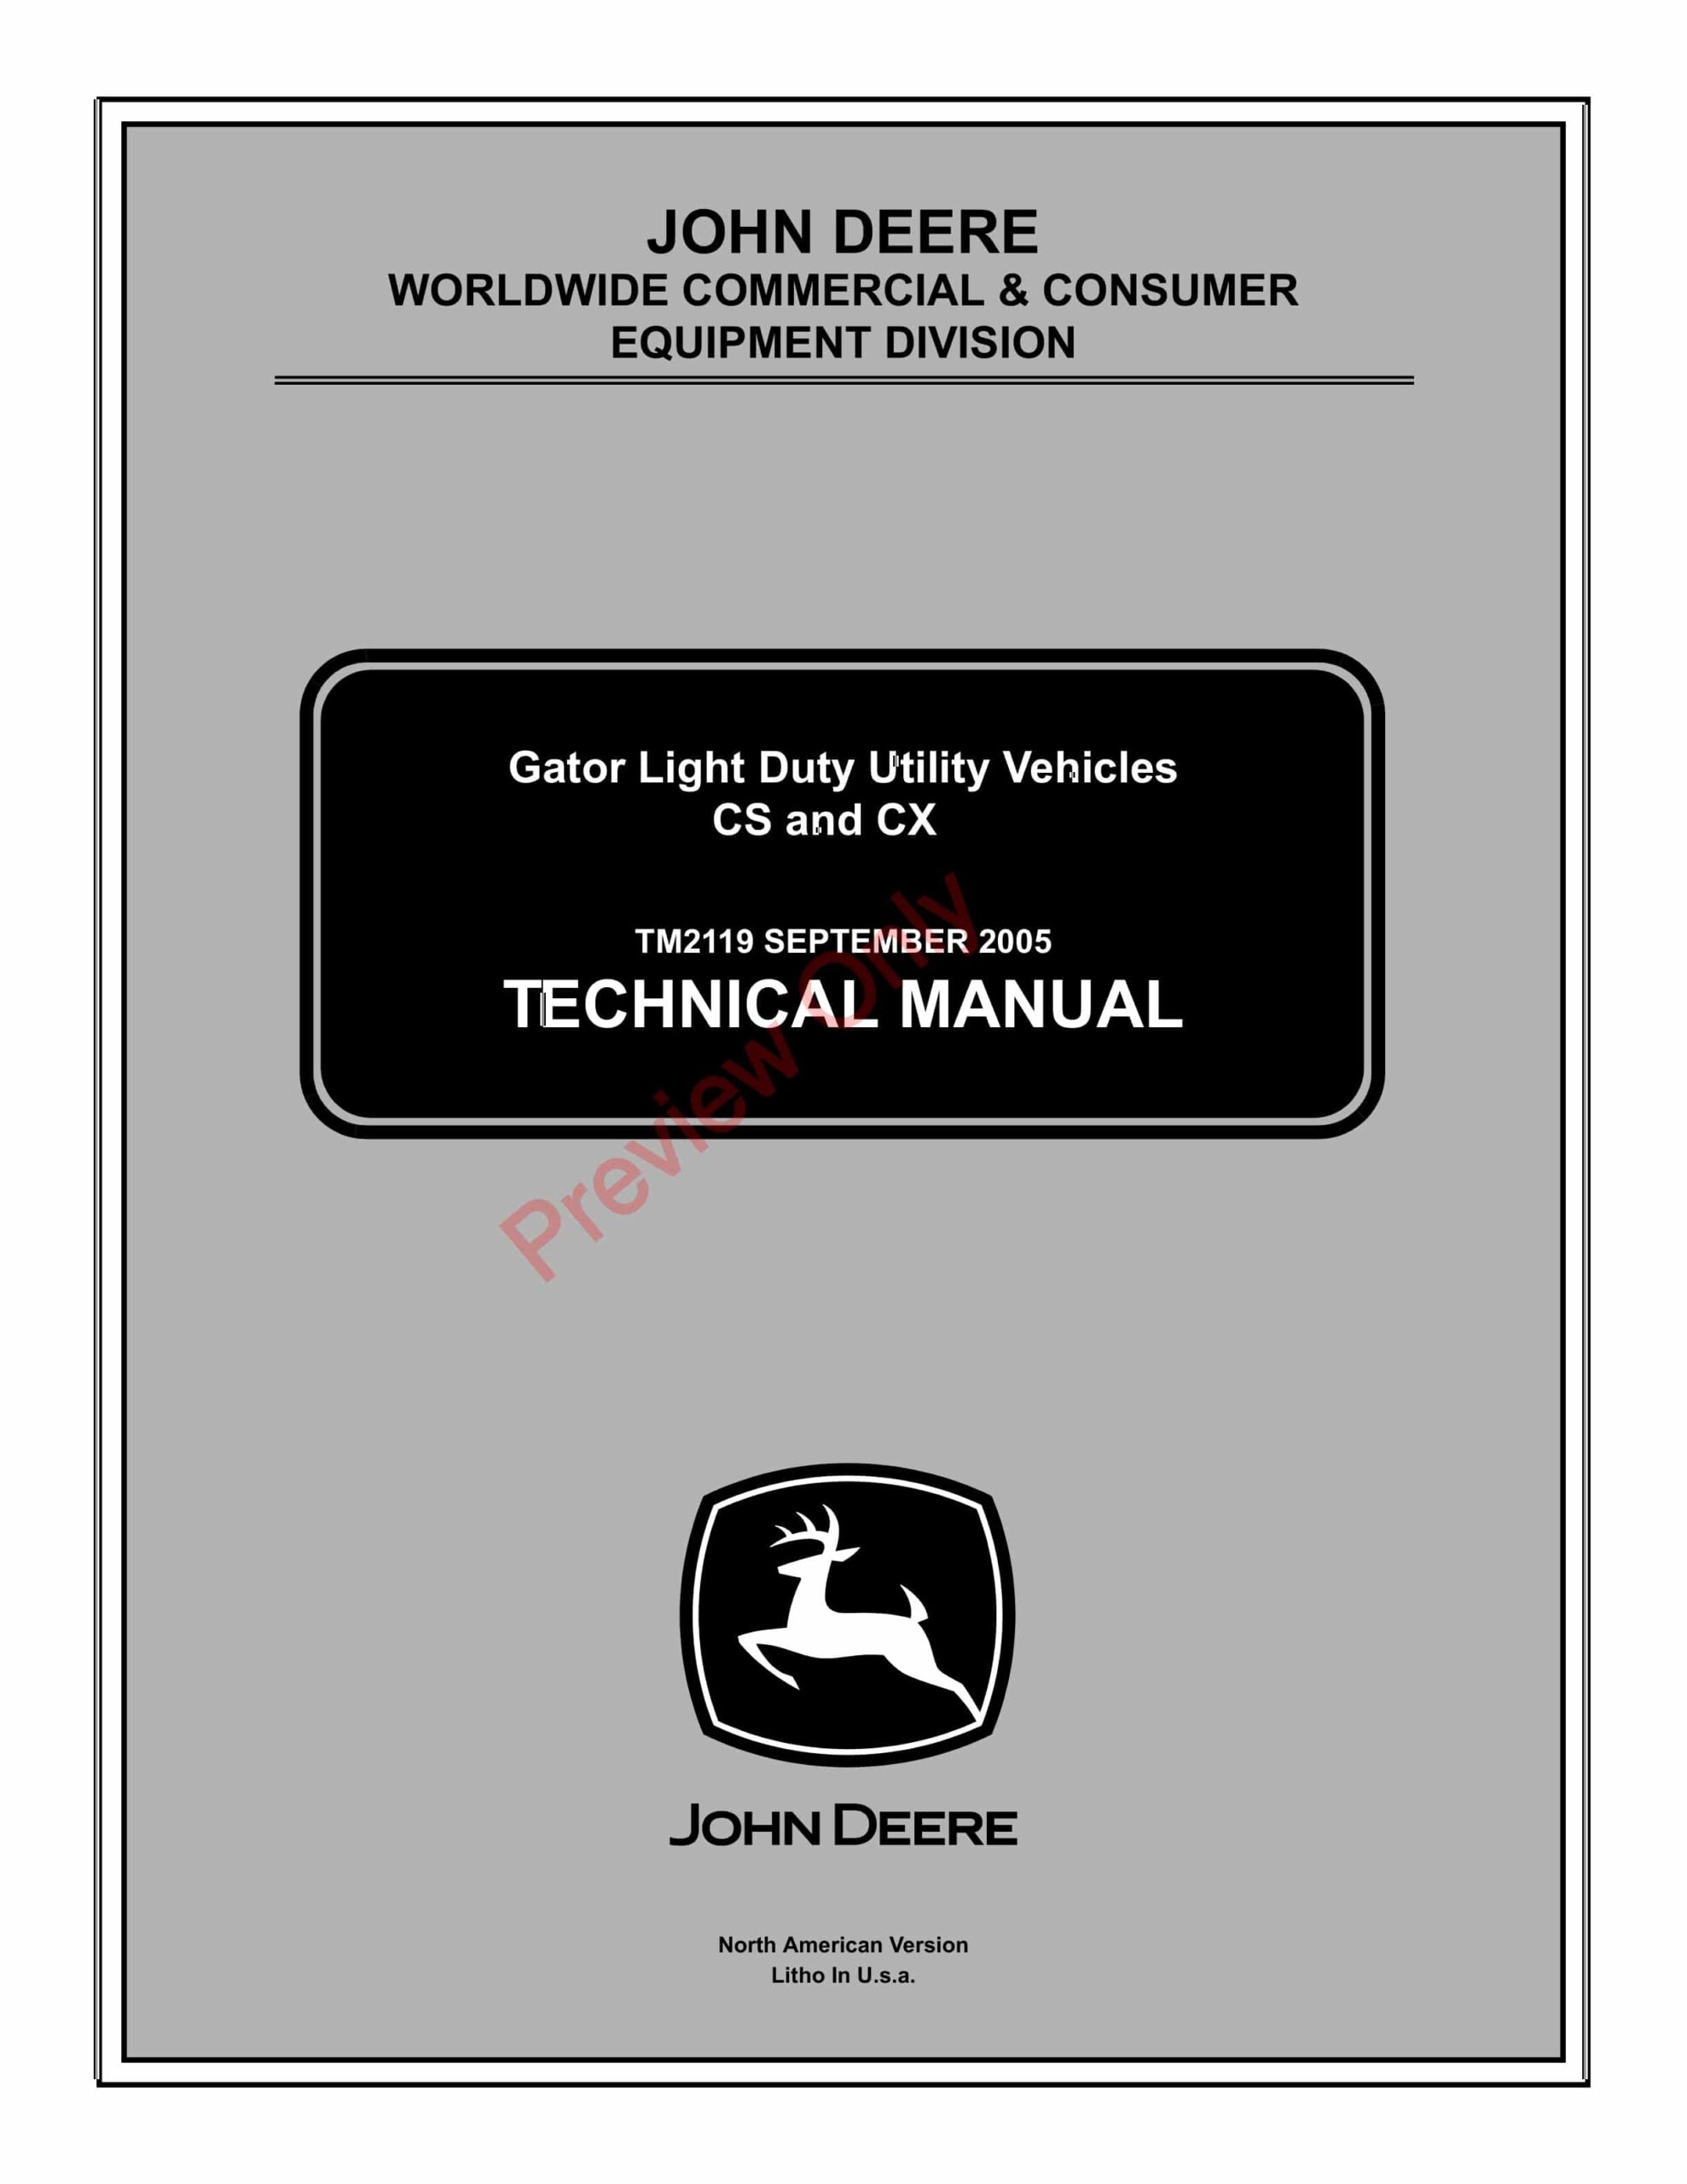 John Deere CS and CX Gator Utility Vehicle Technical Manual TM2119 01SEP05-1